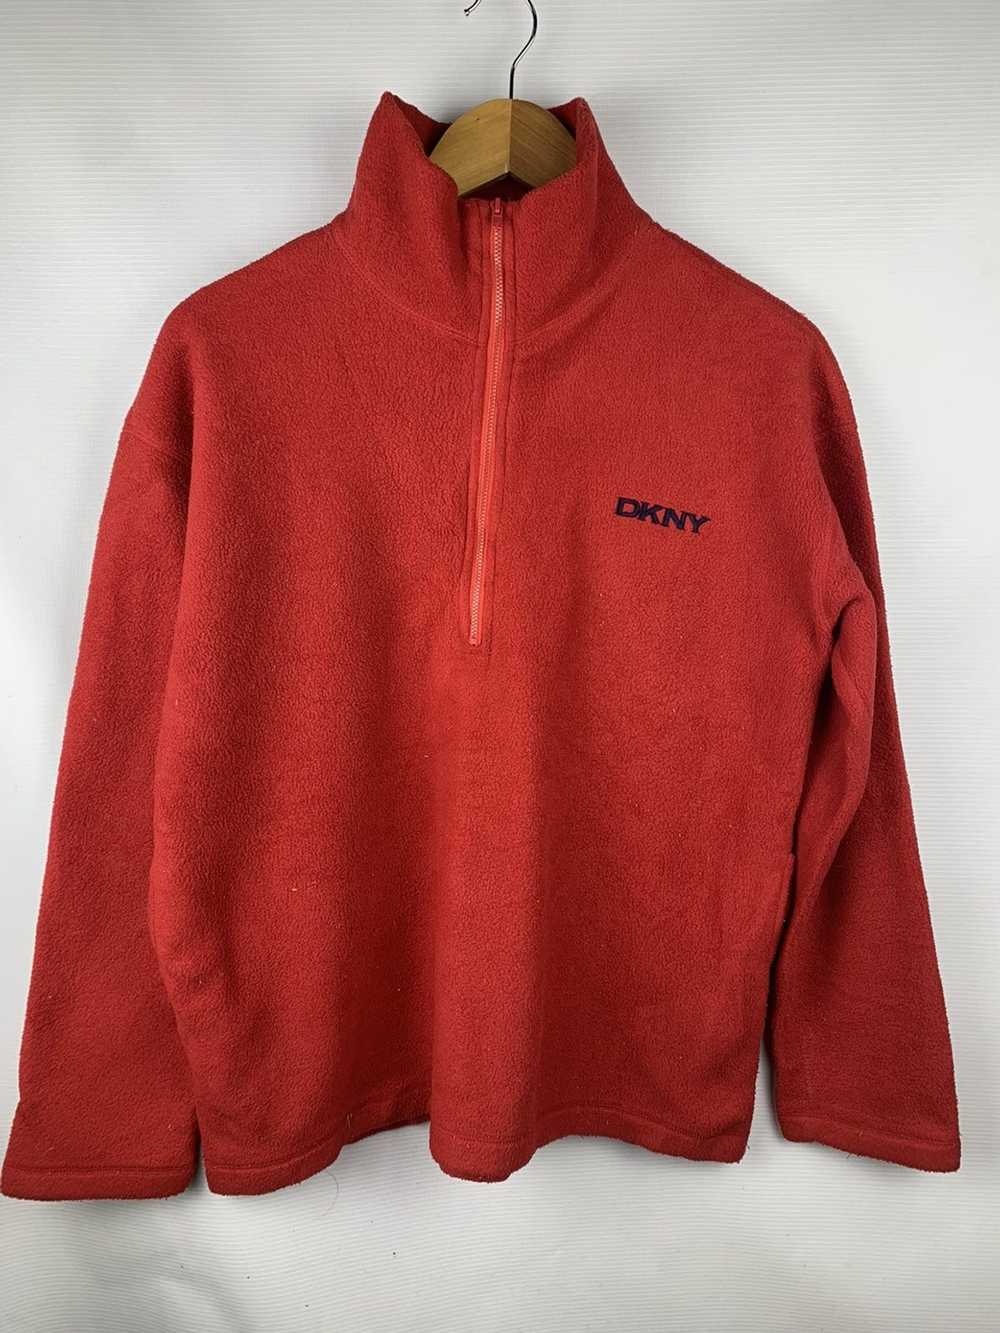 DKNY × Japanese Brand DKNY Fleece jacket very nic… - image 8